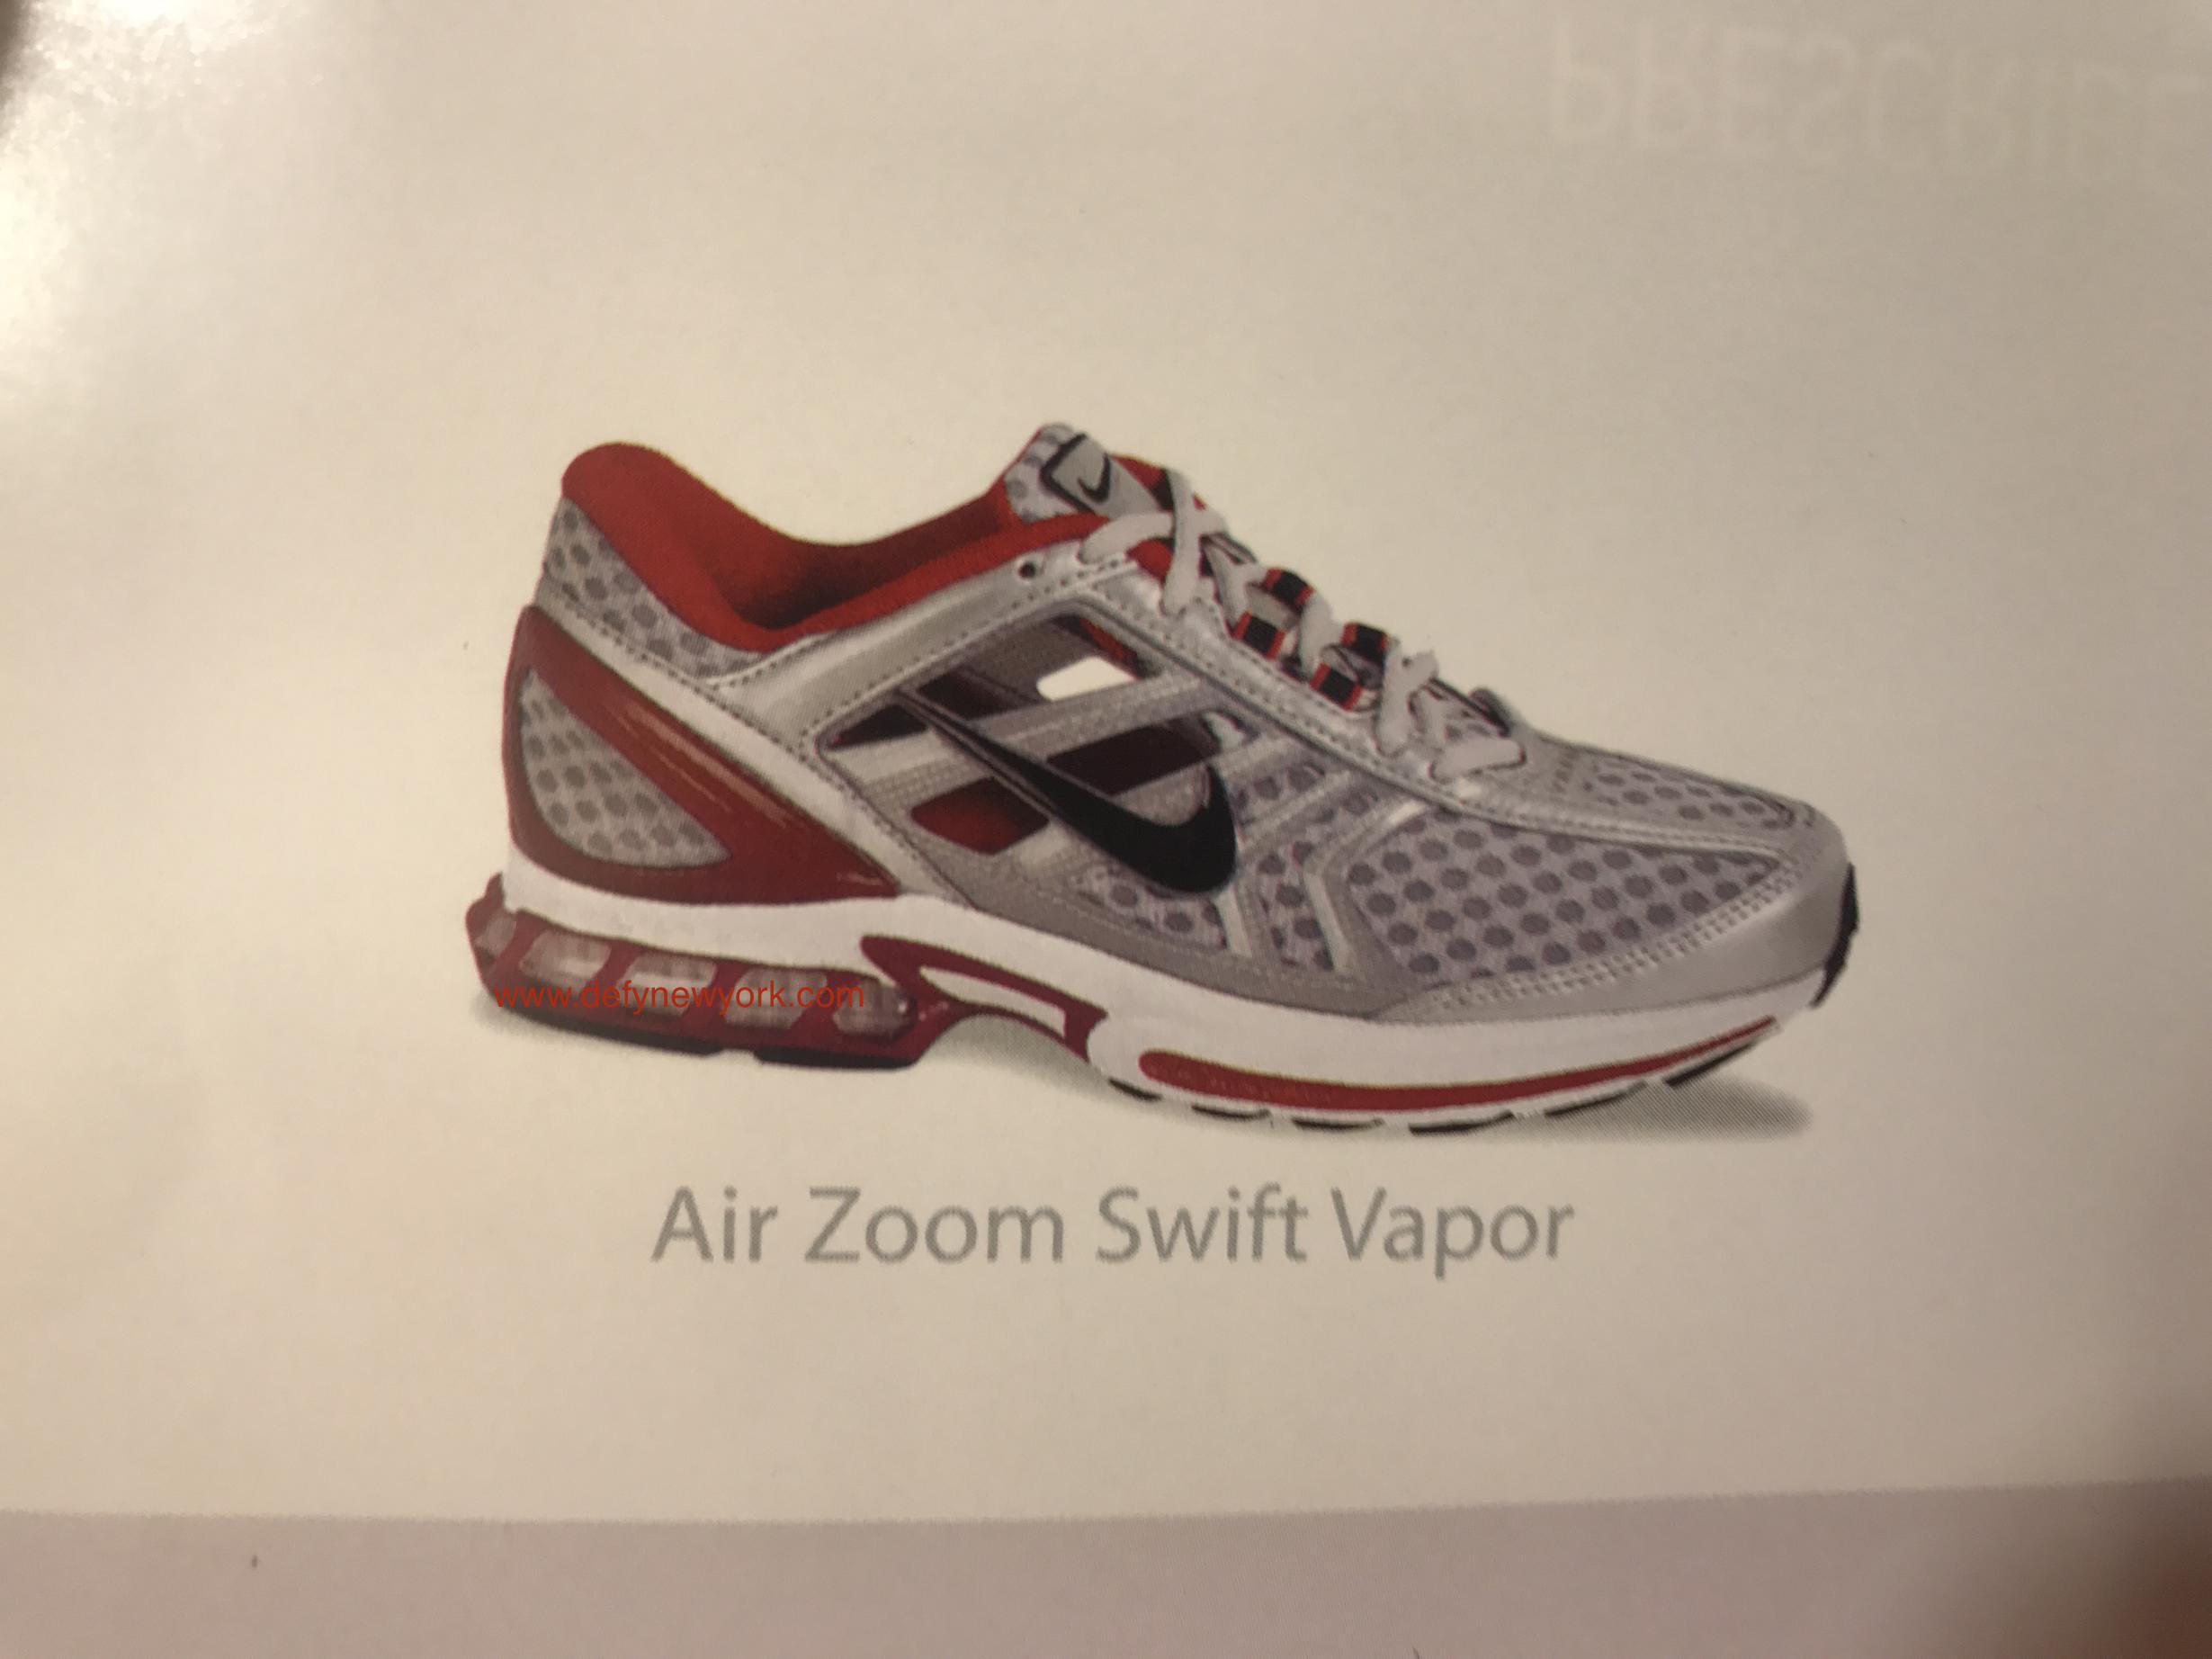 Nike Air Zoom Swift Vapor Running Shoe 2003